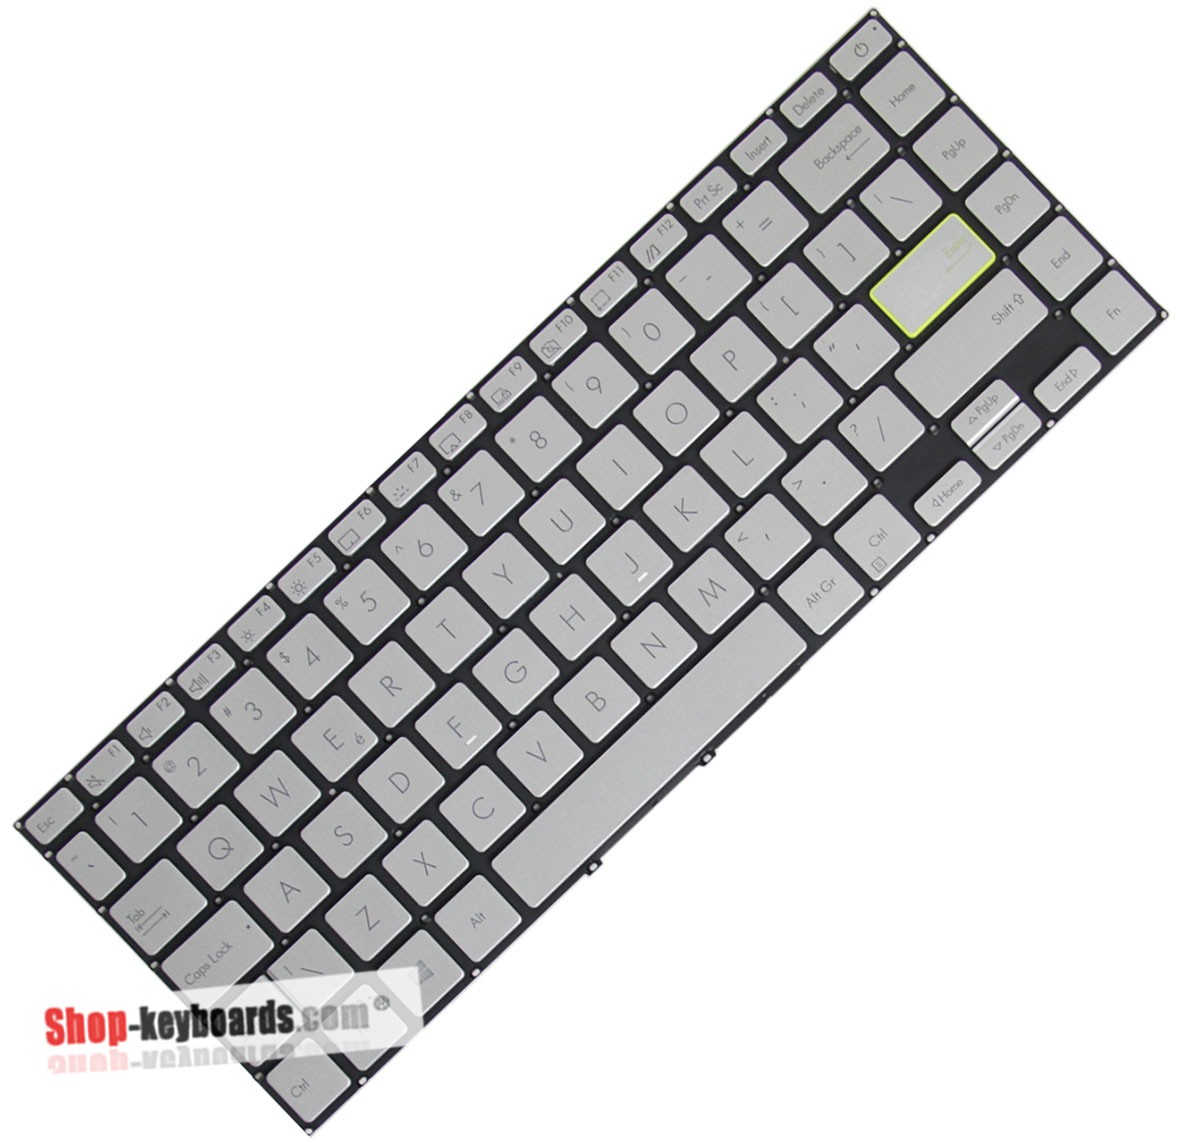 Asus S413JA Keyboard replacement